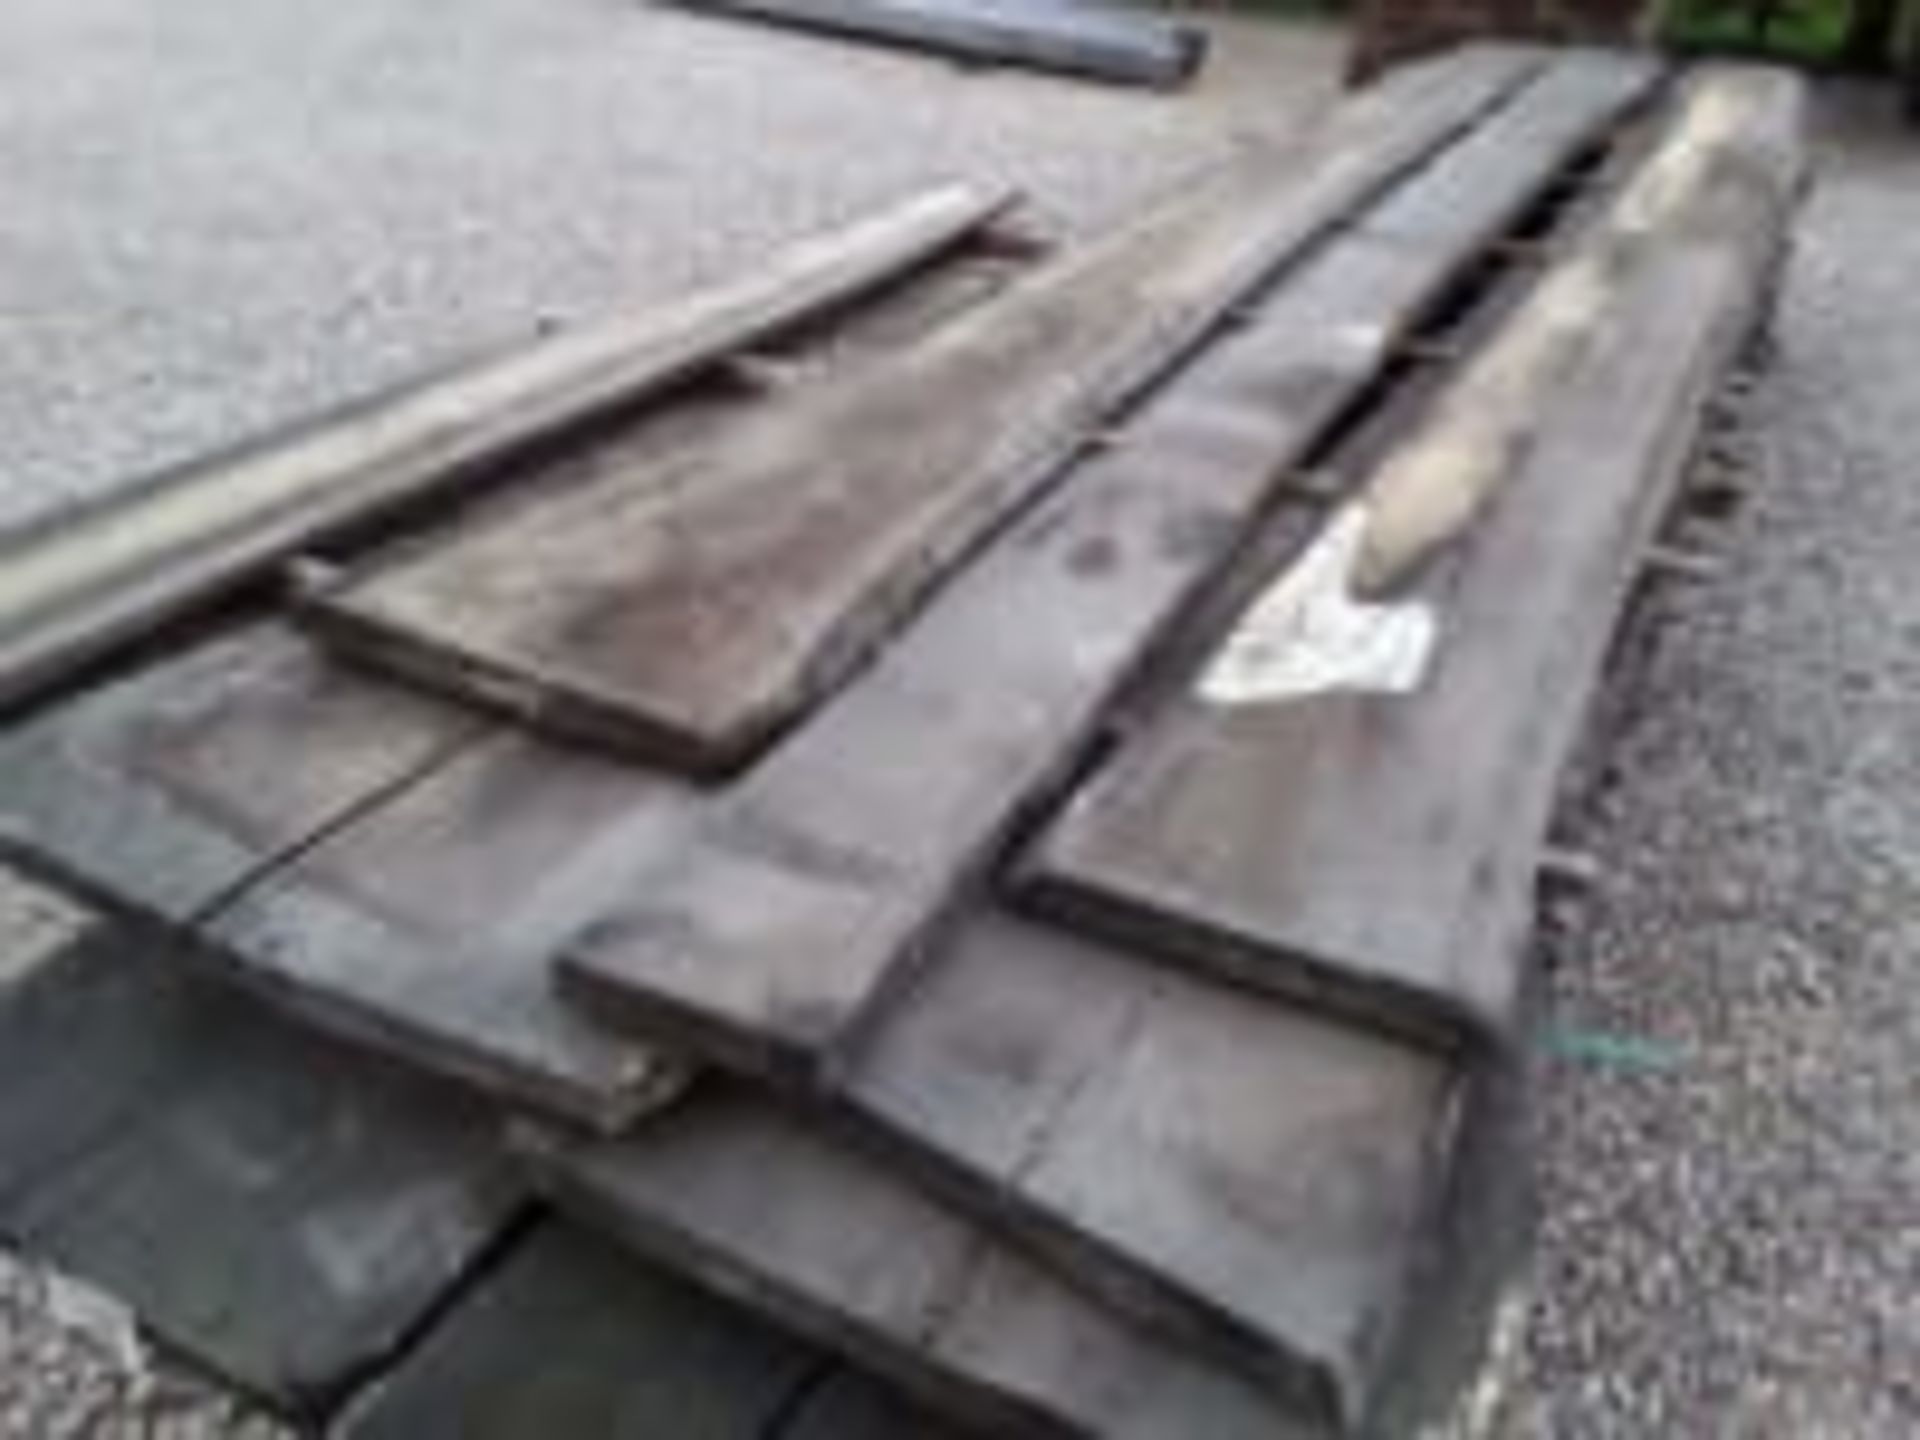 7 x Hardwood Air Dried Sawn Waney Edge / Live Edge English Oak Timber Boards / Slabs / Table Tops